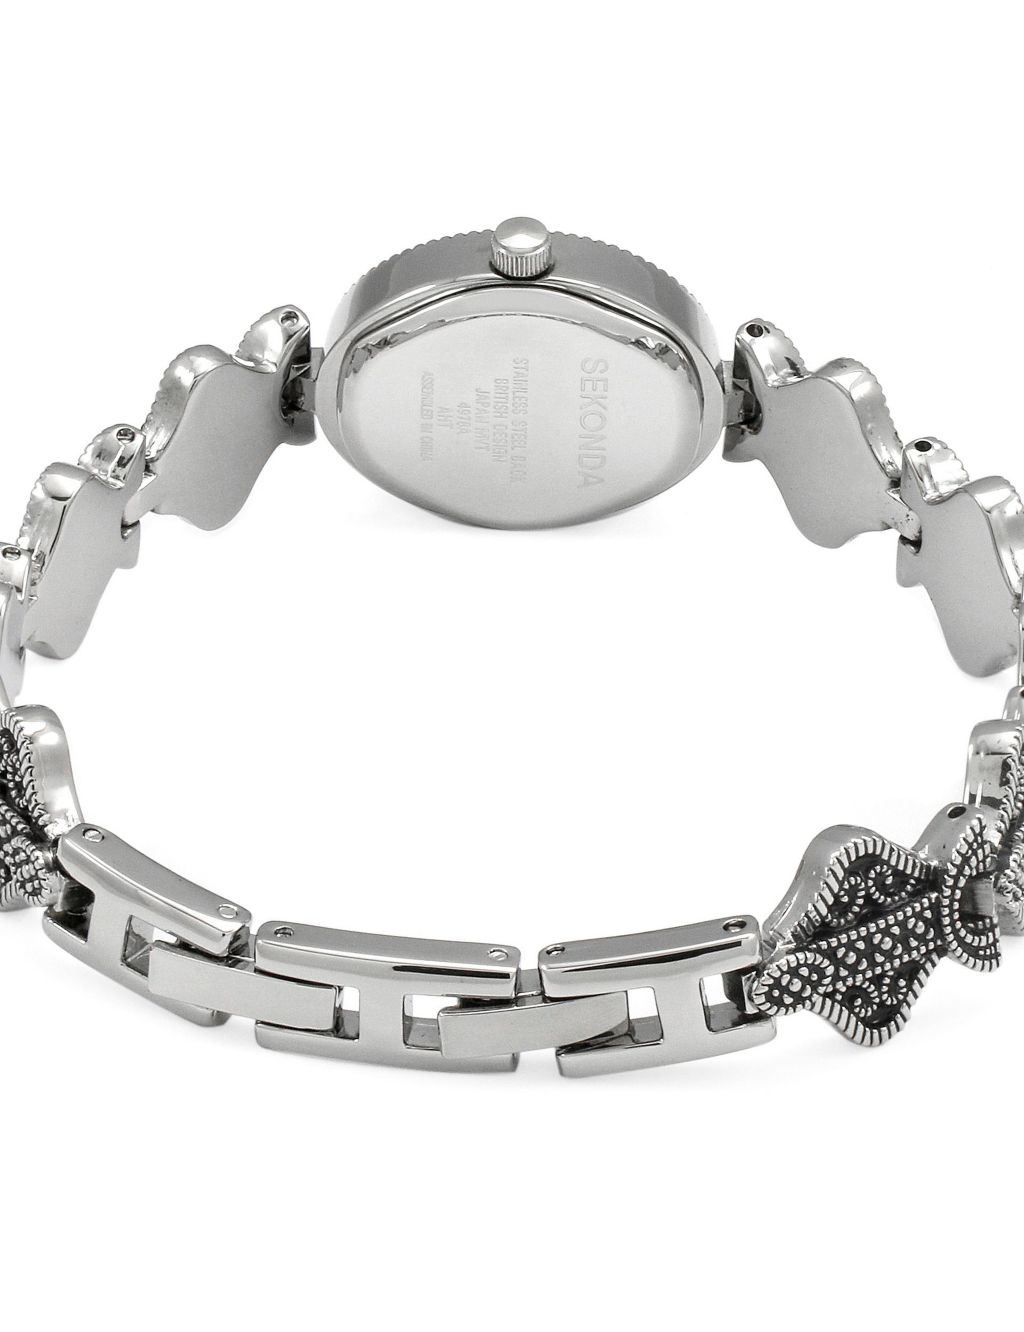 Sekonda Silver Stainless Steel Watch image 2